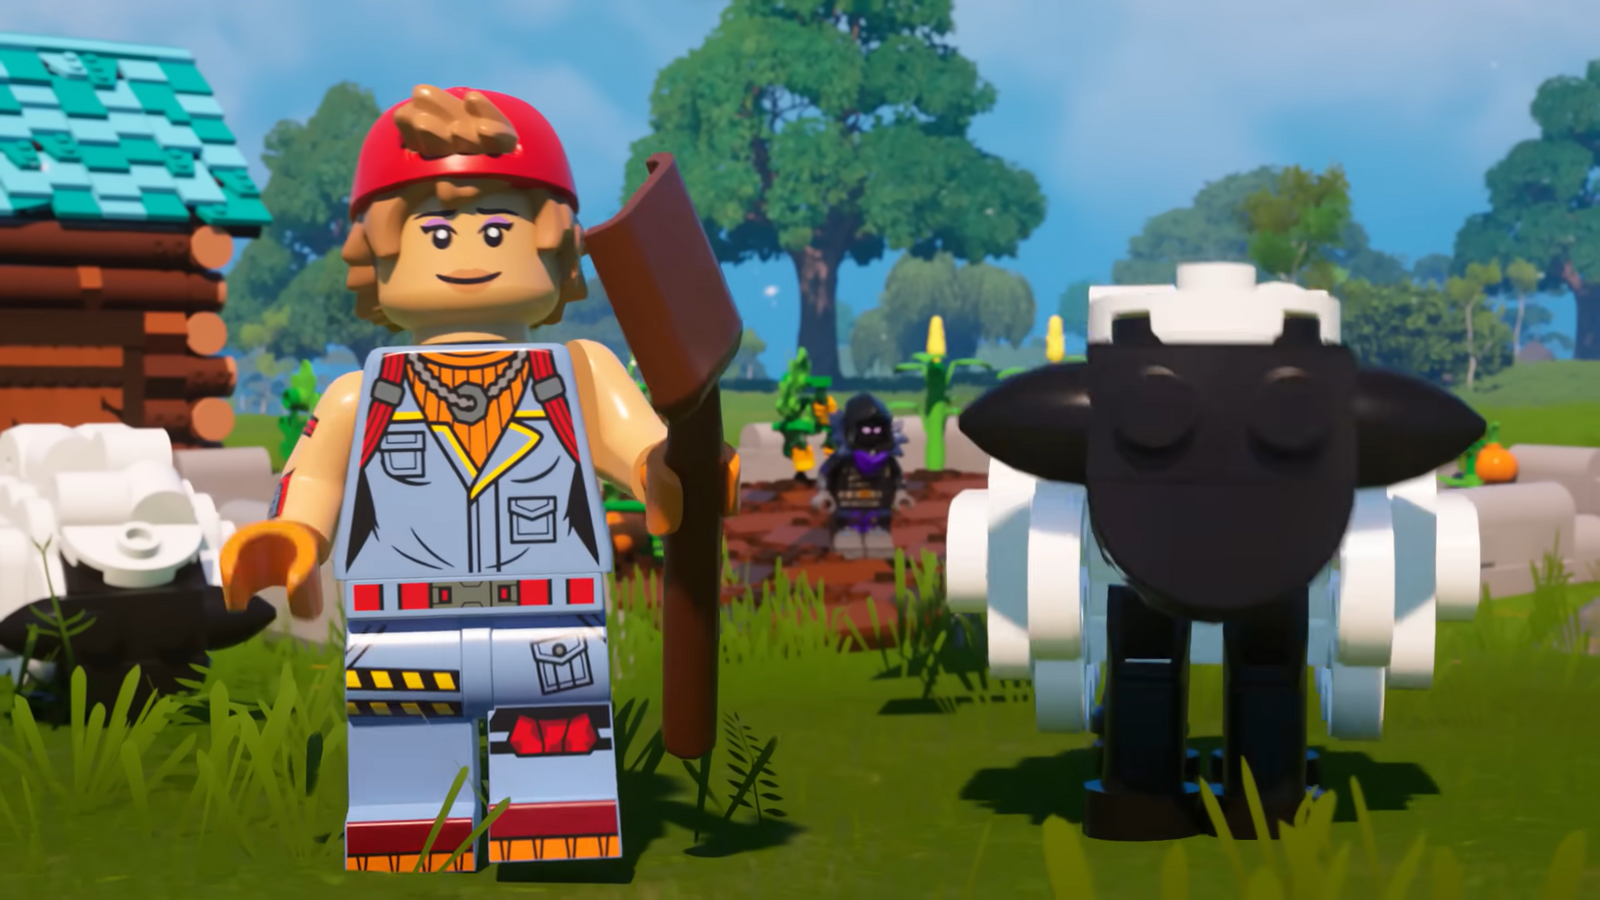 Farmer with a sheep in Lego Fortnite.